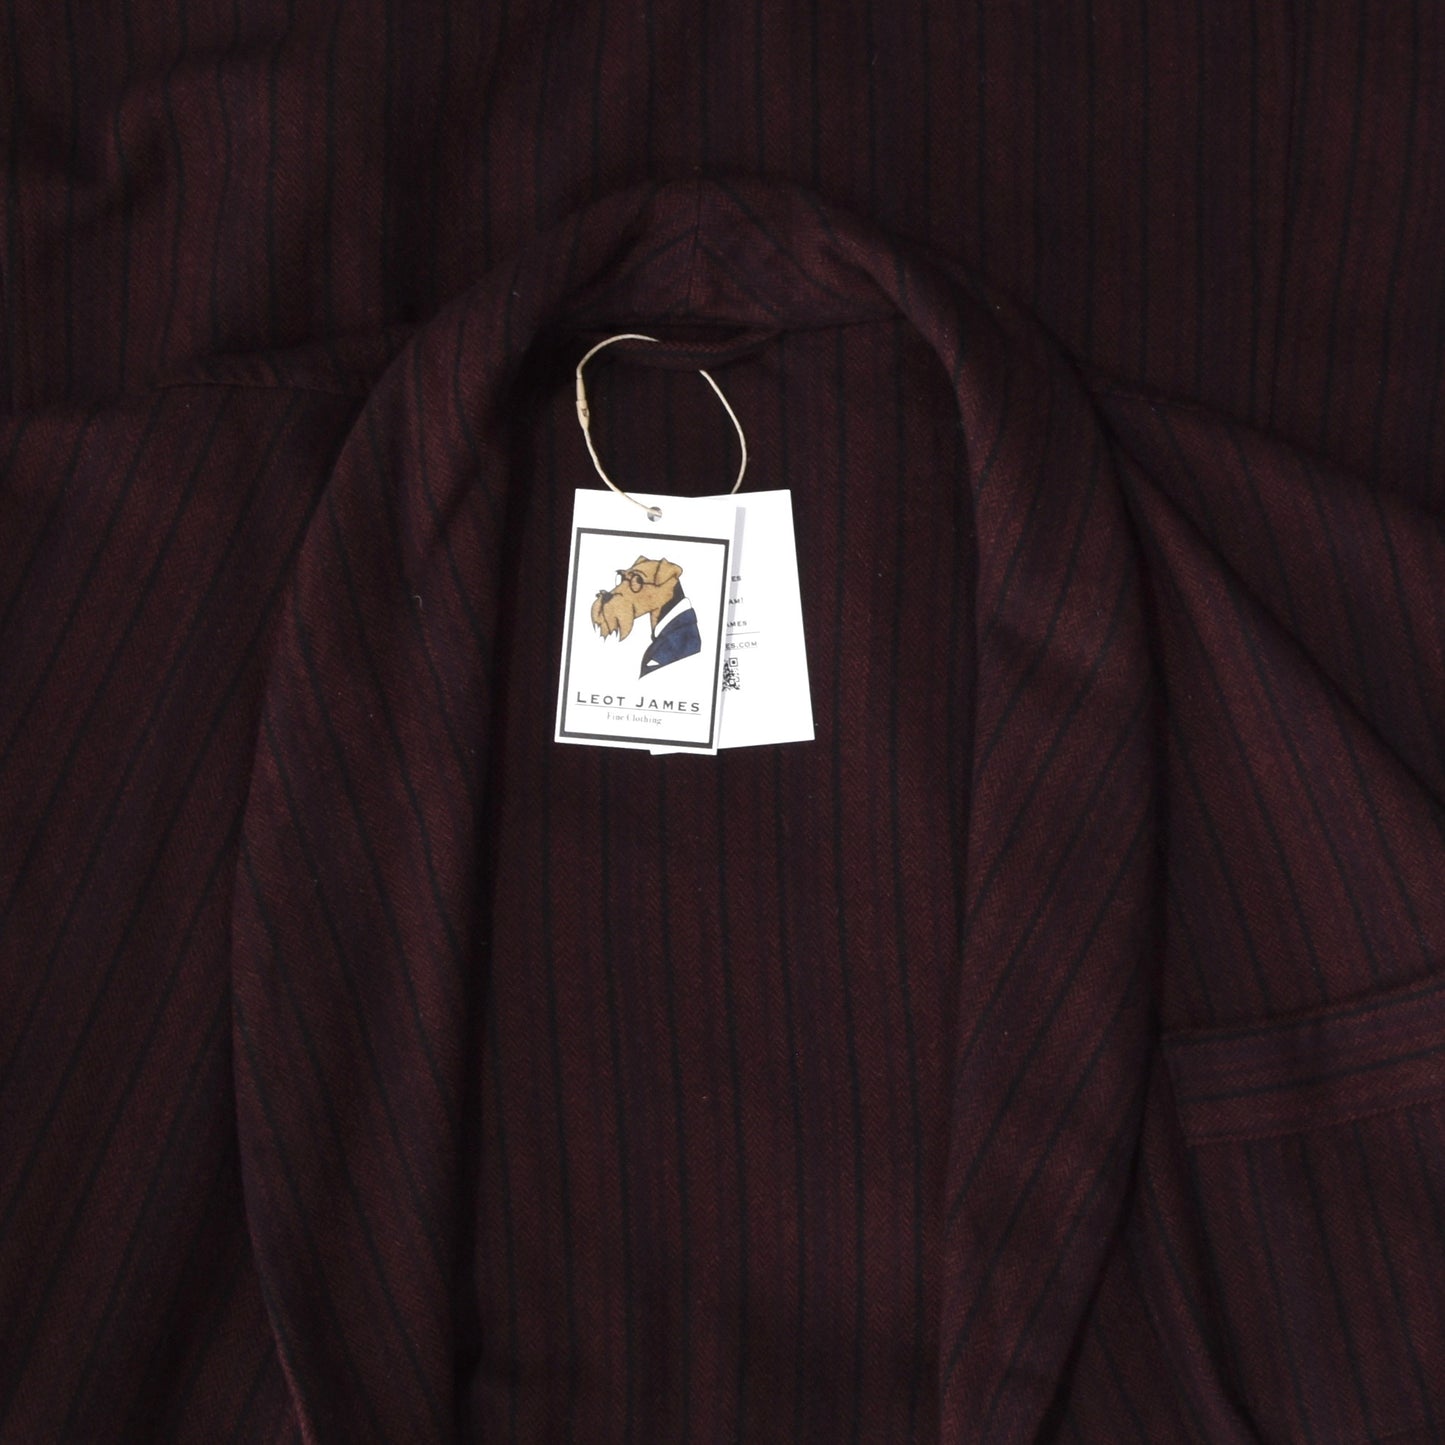 Classic Shawl Collar Wool Robe - Burgundy/Black Stripes